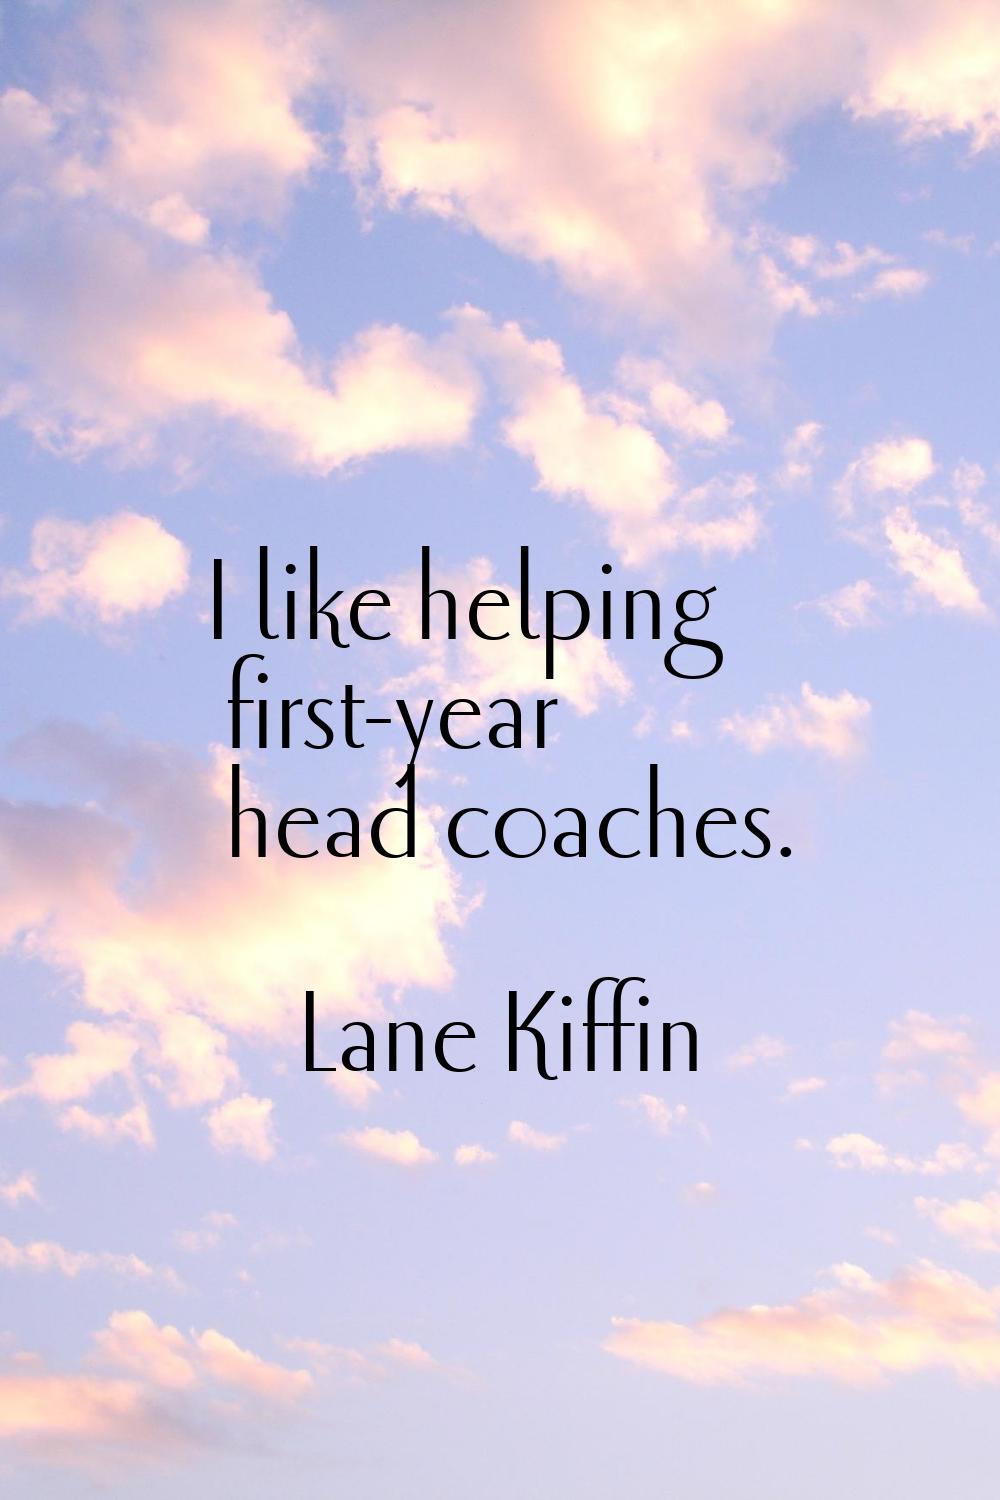 I like helping first-year head coaches.